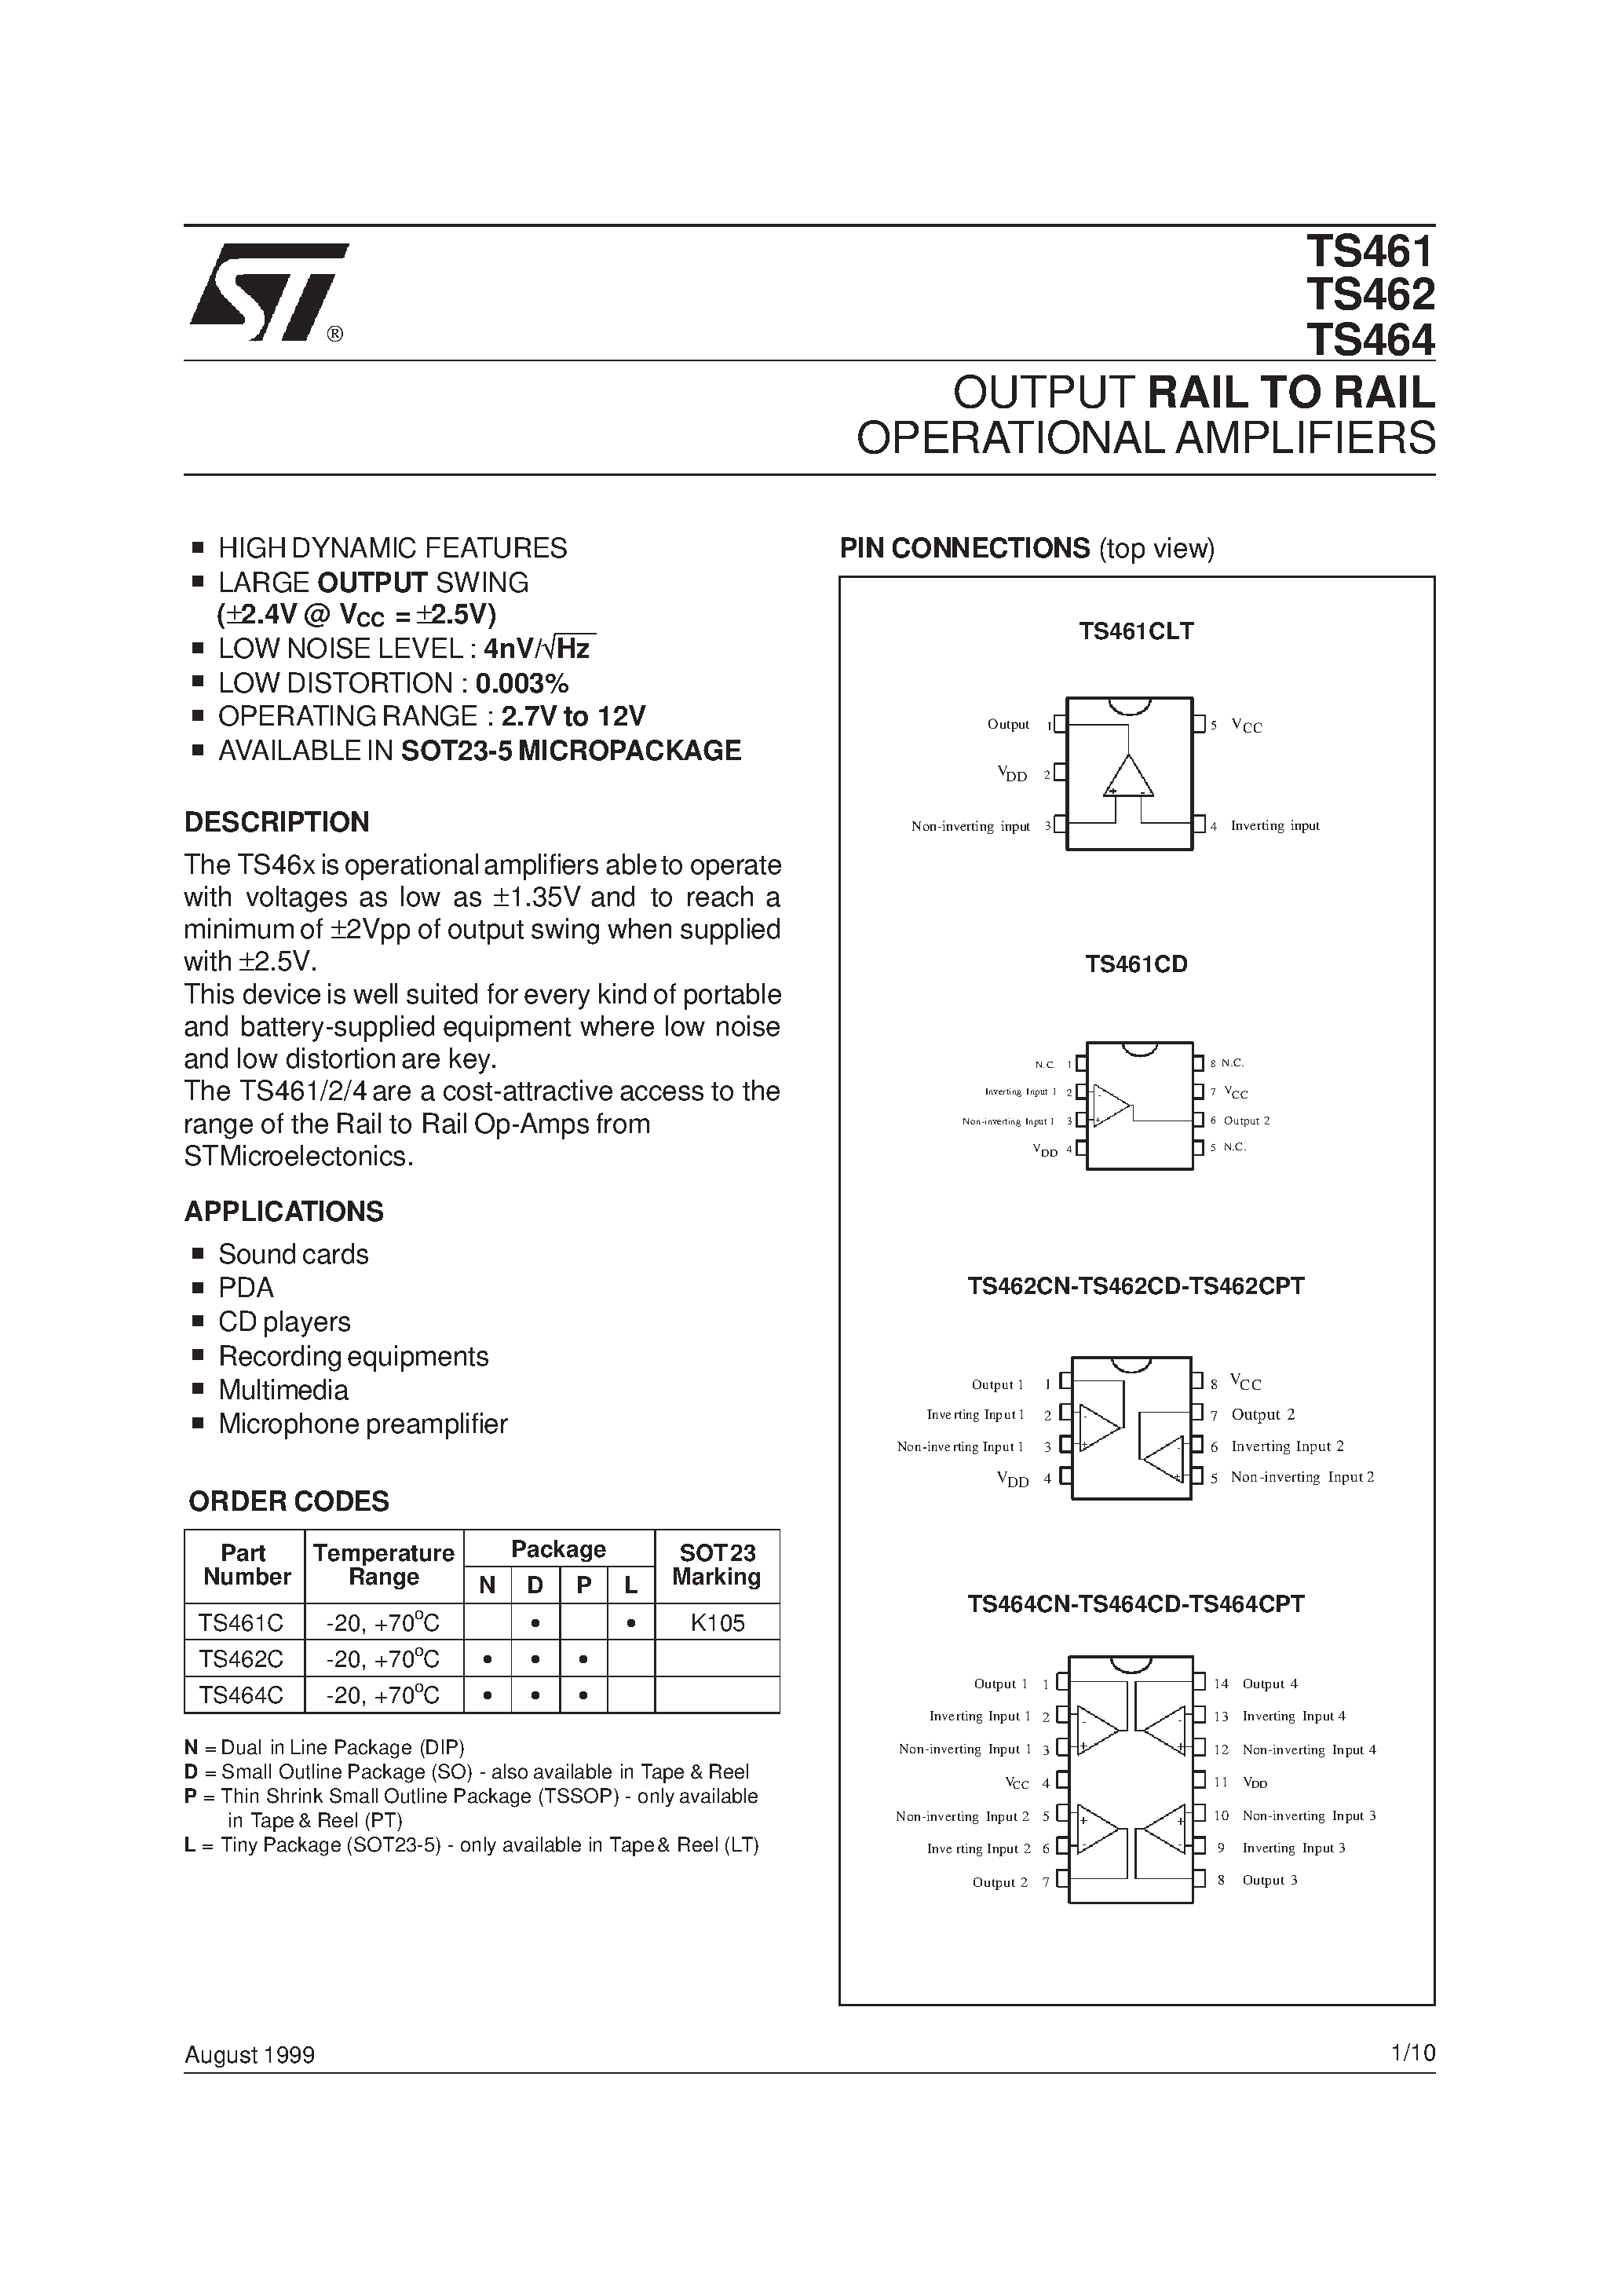 Datasheet TS462CD - OUTPUT RAIL TO RAIL OPERATIONAL AMPLIFIERS page 1